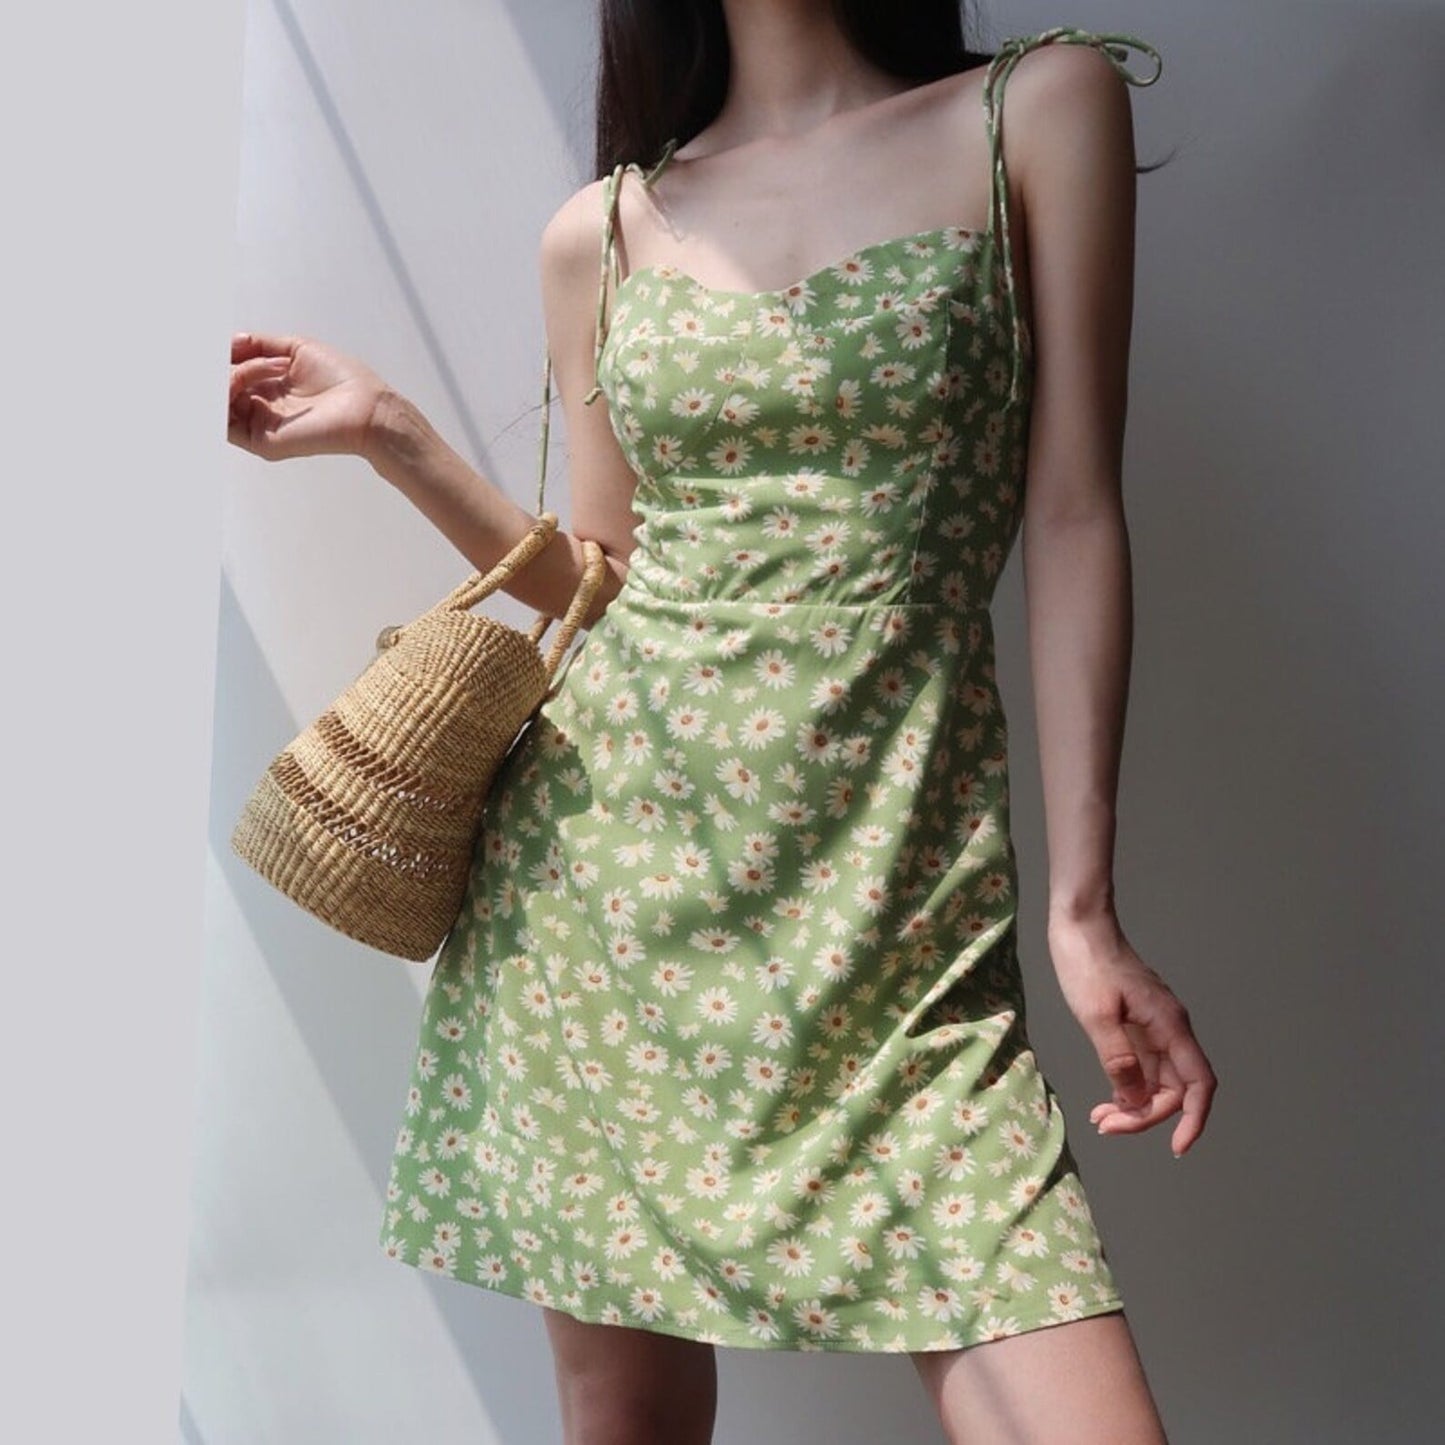 Blackpink Jennie-Inspired Green Floral Dress